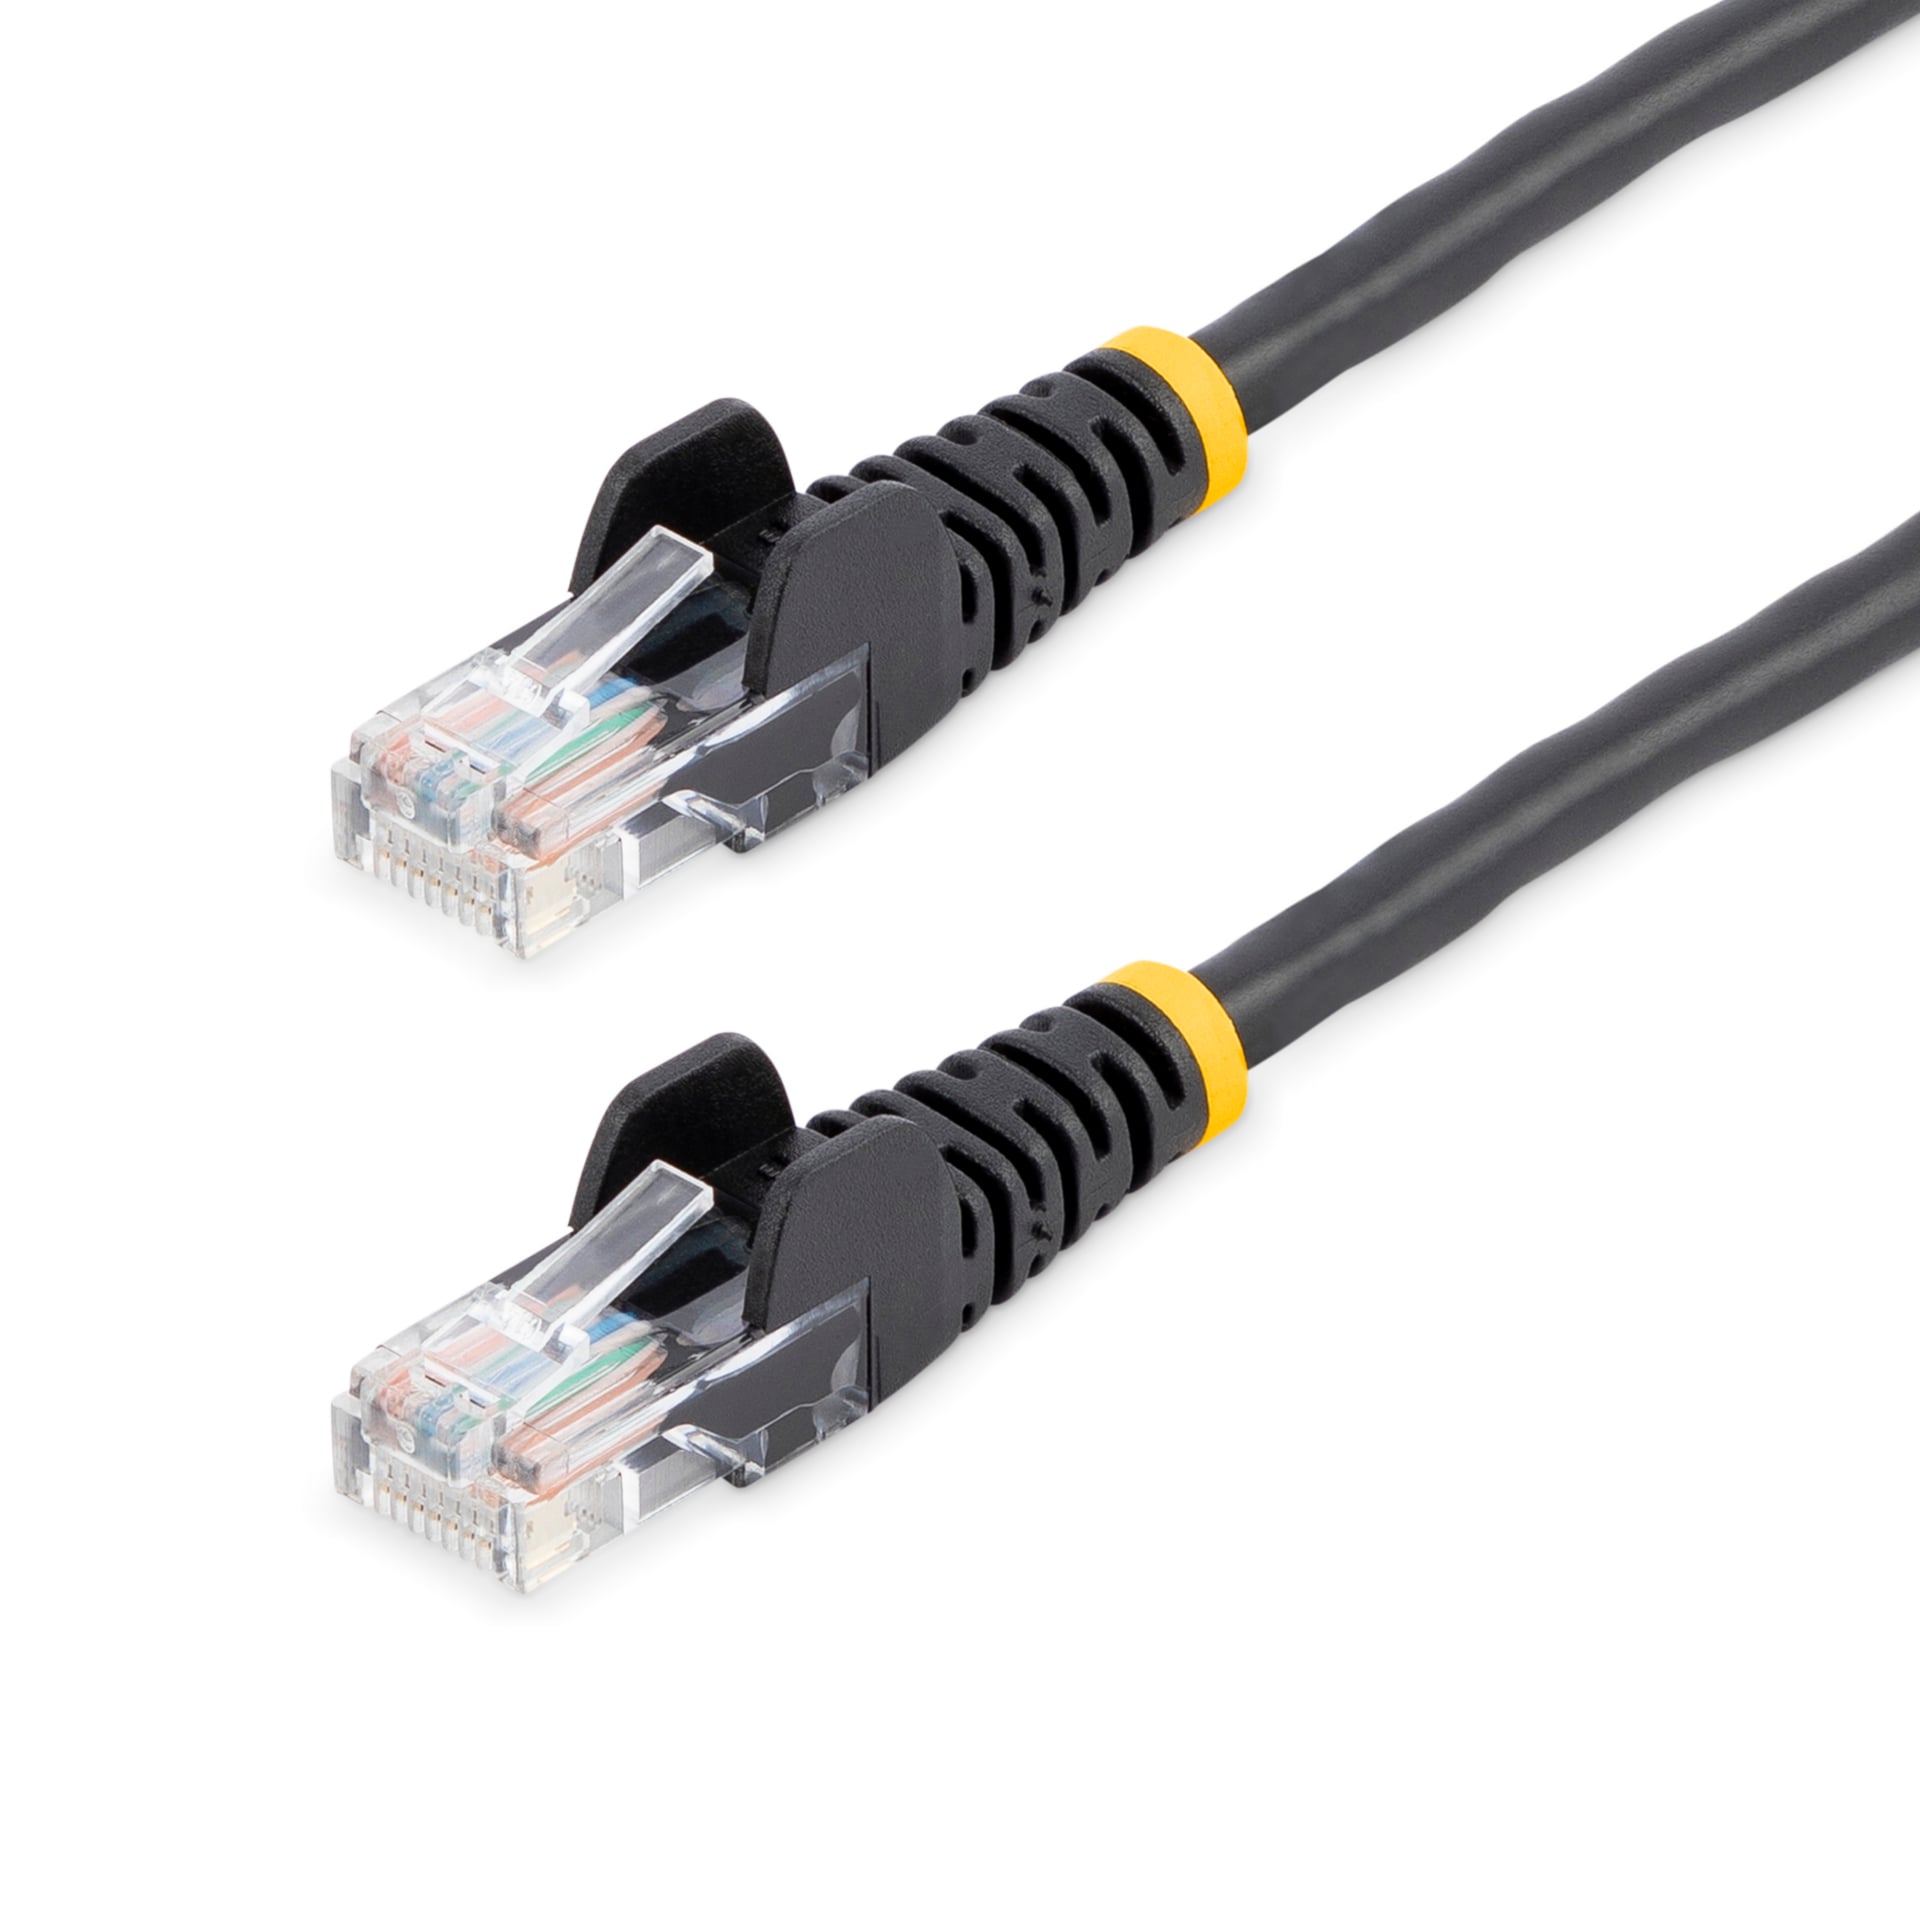 StarTech.com Cat5e Ethernet Cable 10 ft Black - Cat 5e Snagless Patch Cable